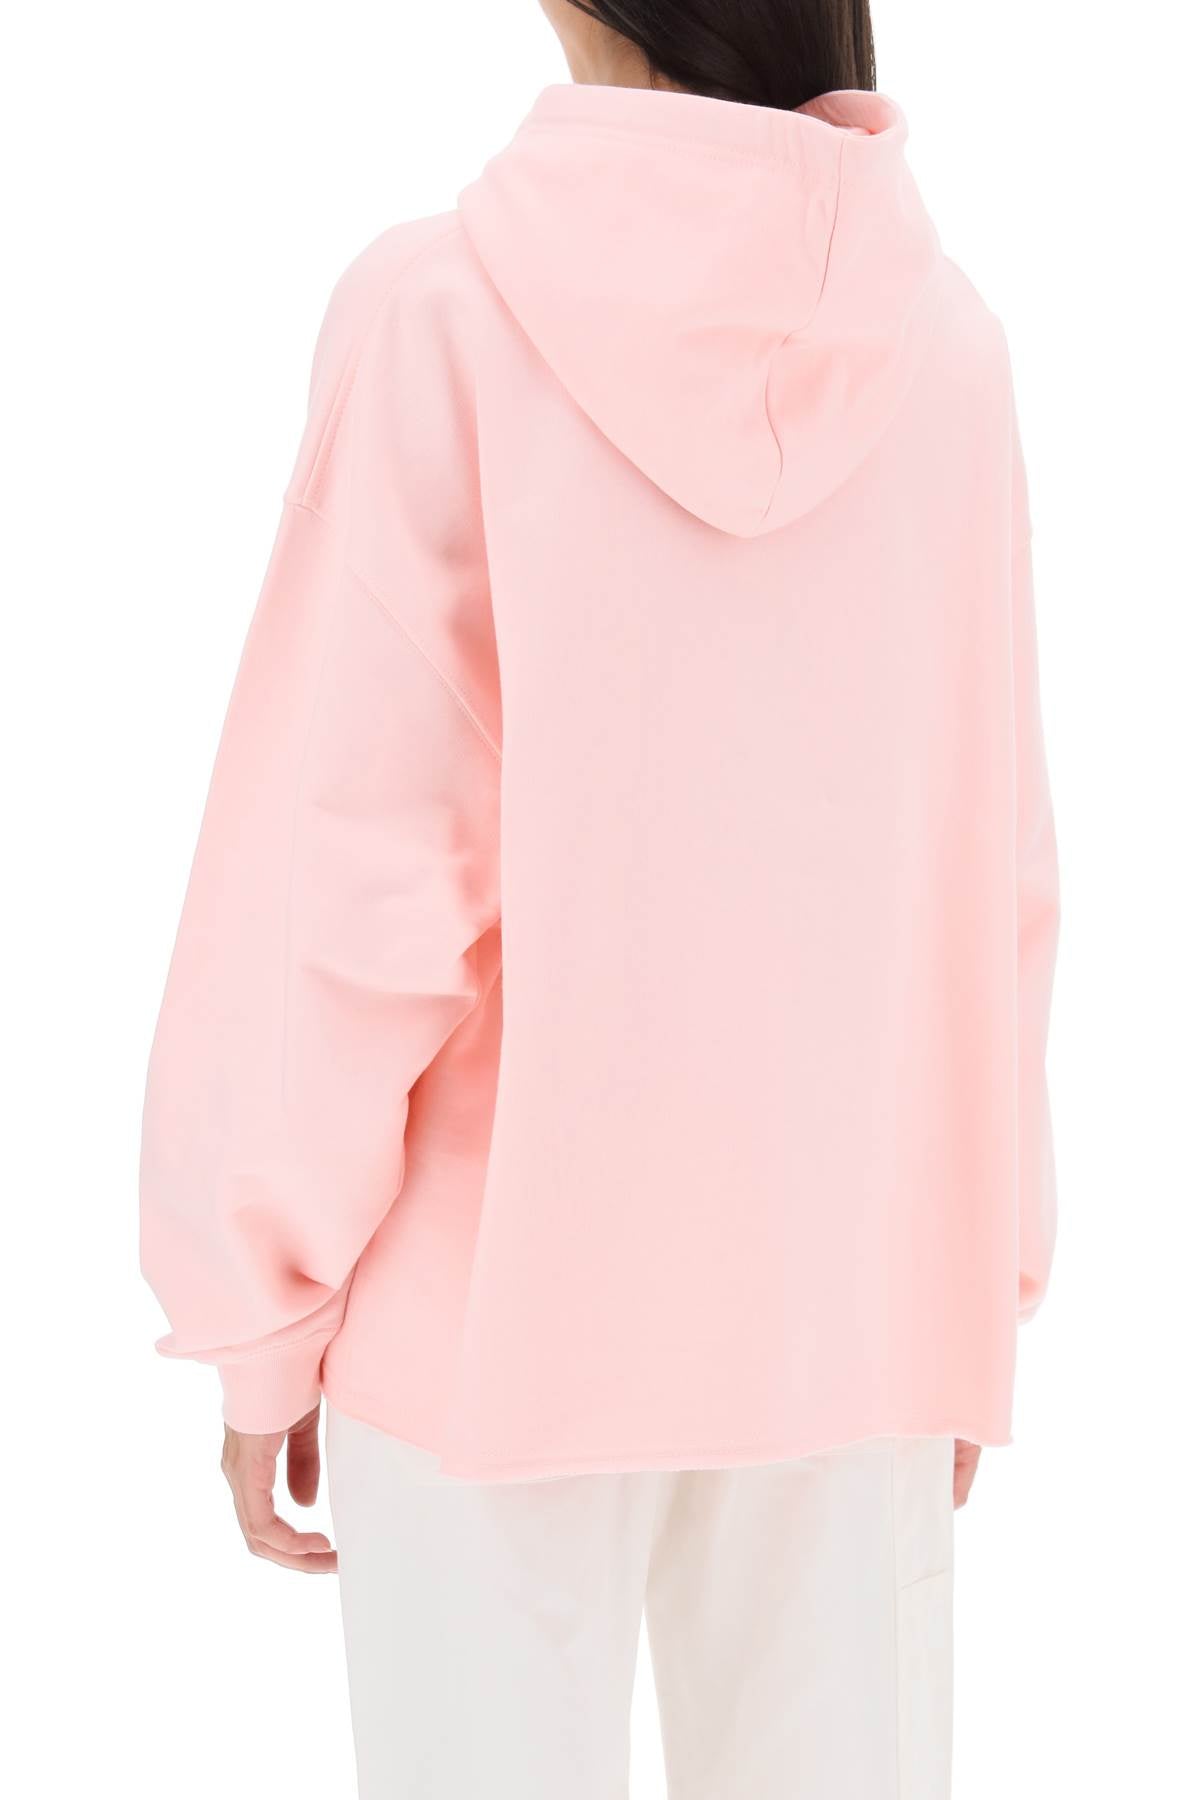 Marni hoodie with logo print-Marni-Urbanheer